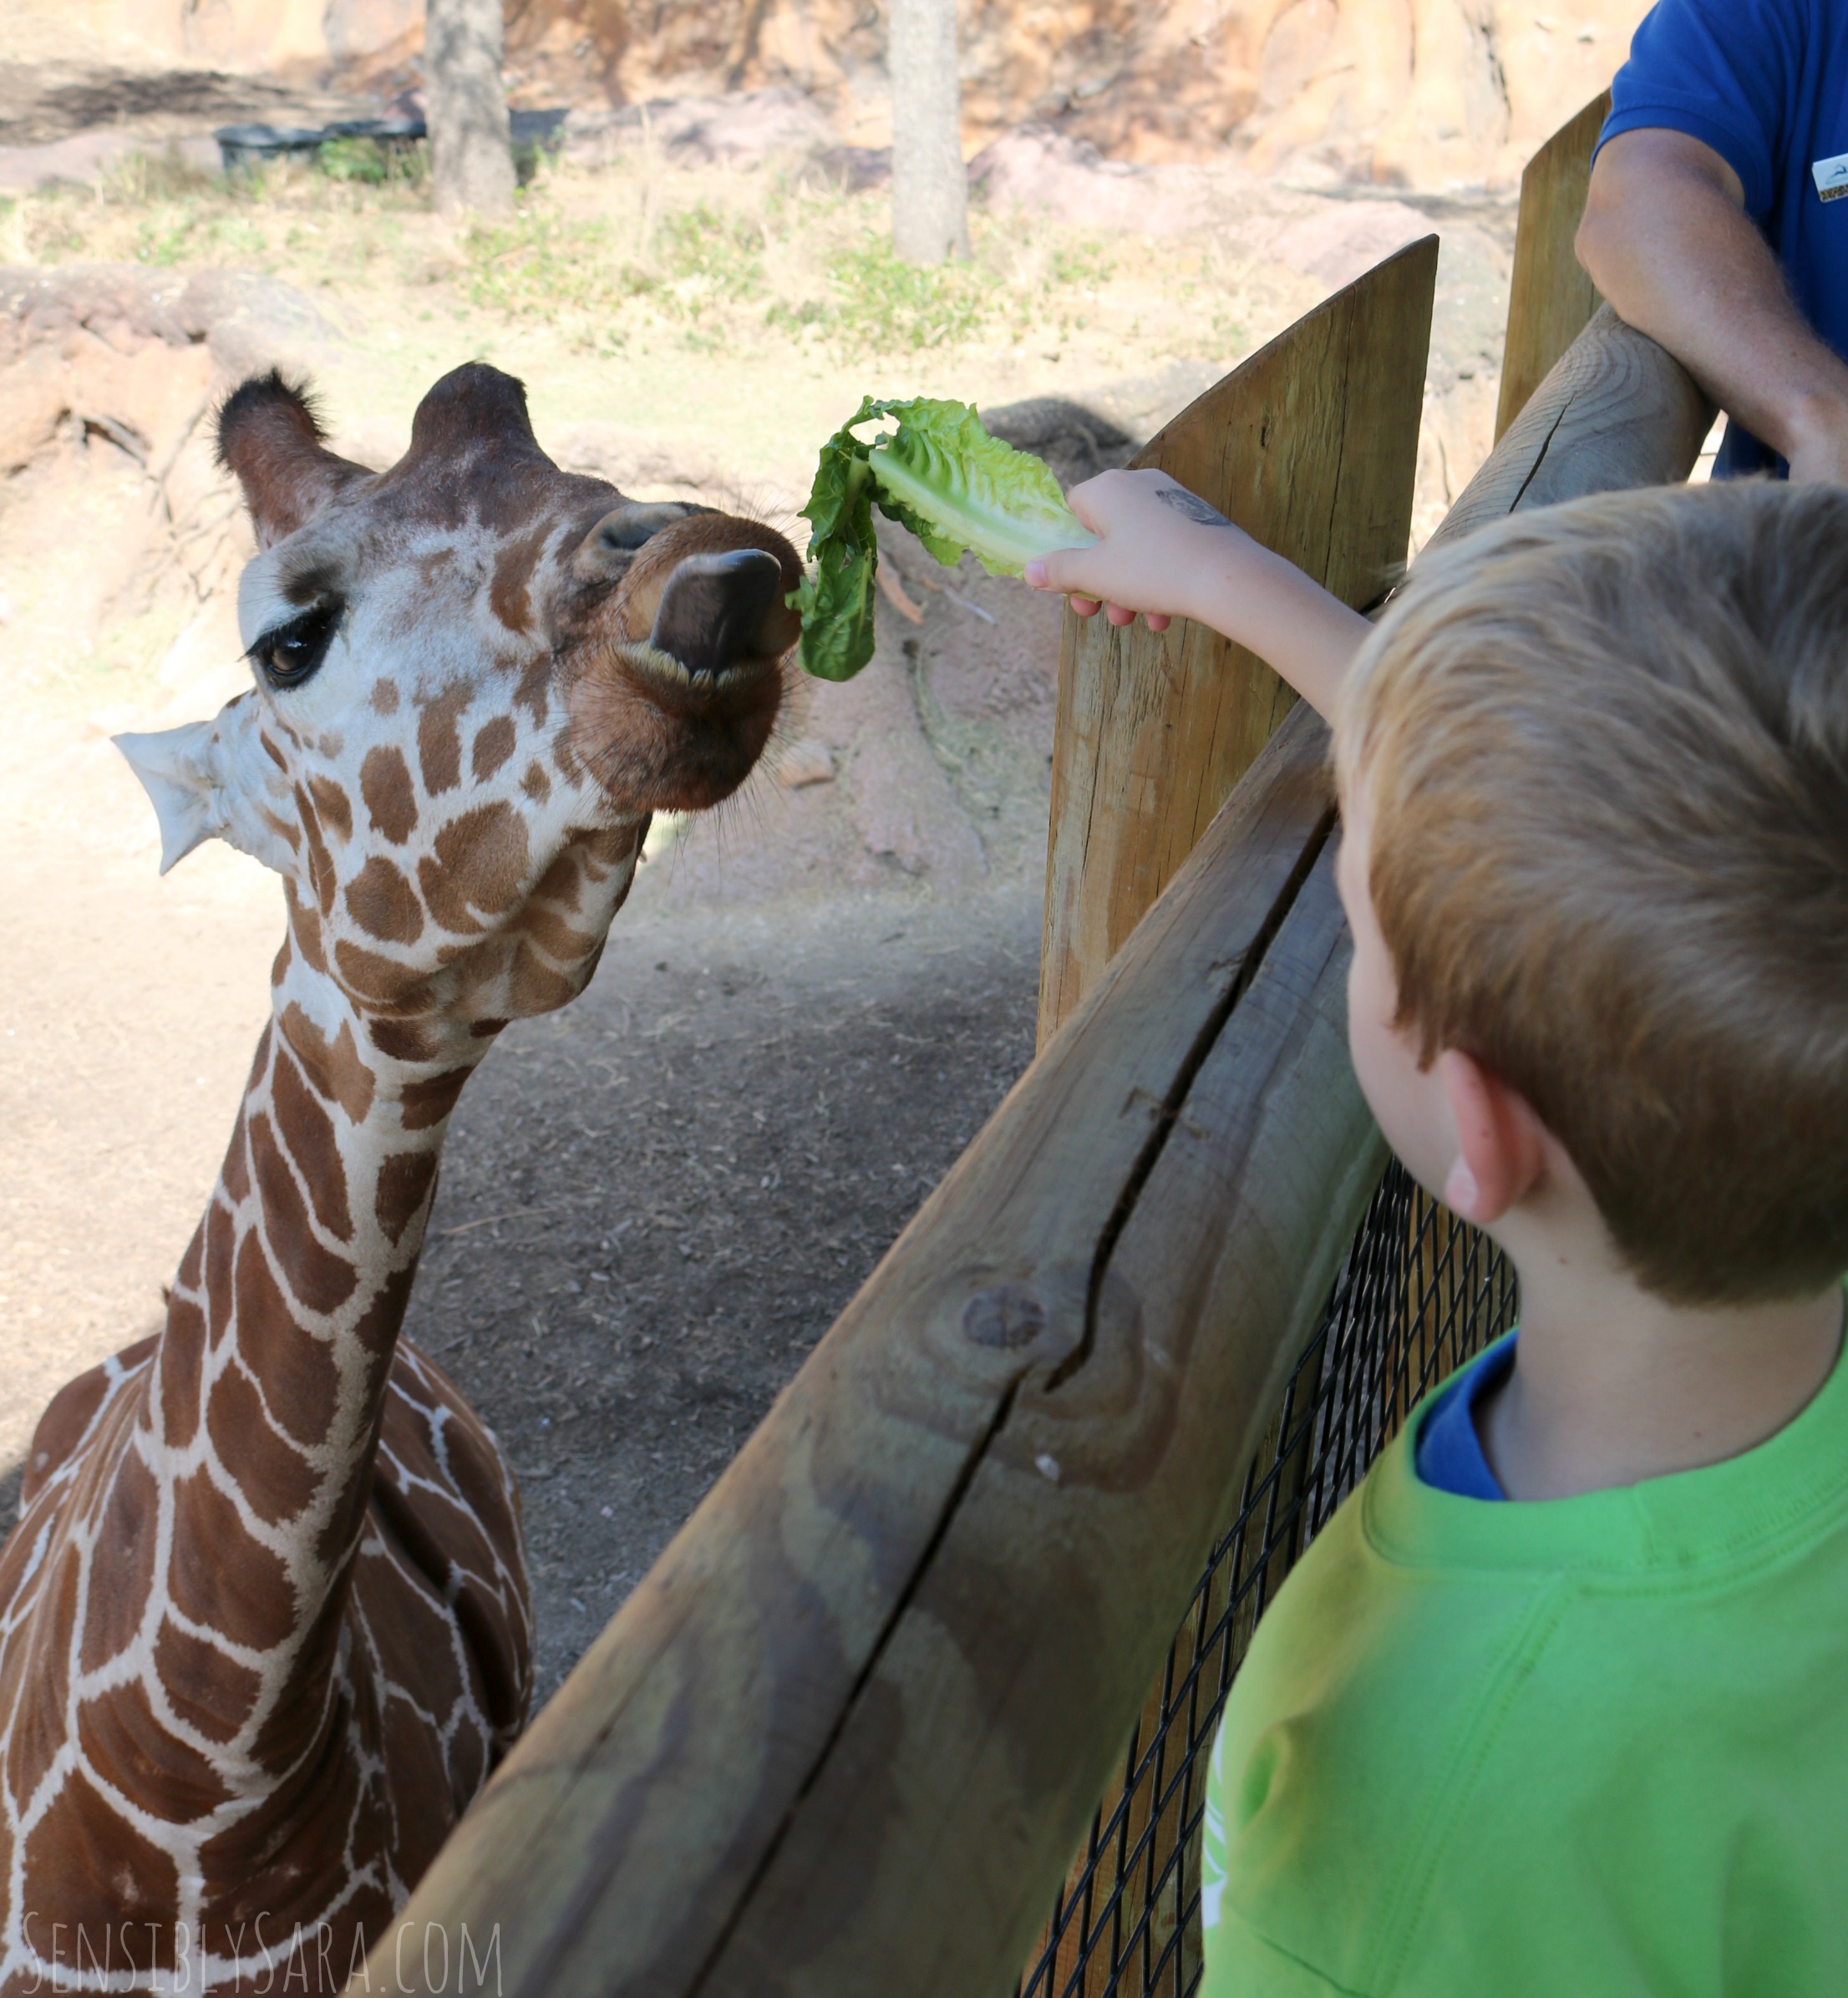 Feed the Giraffes at the San Antonio Zoo | SensiblySara.com